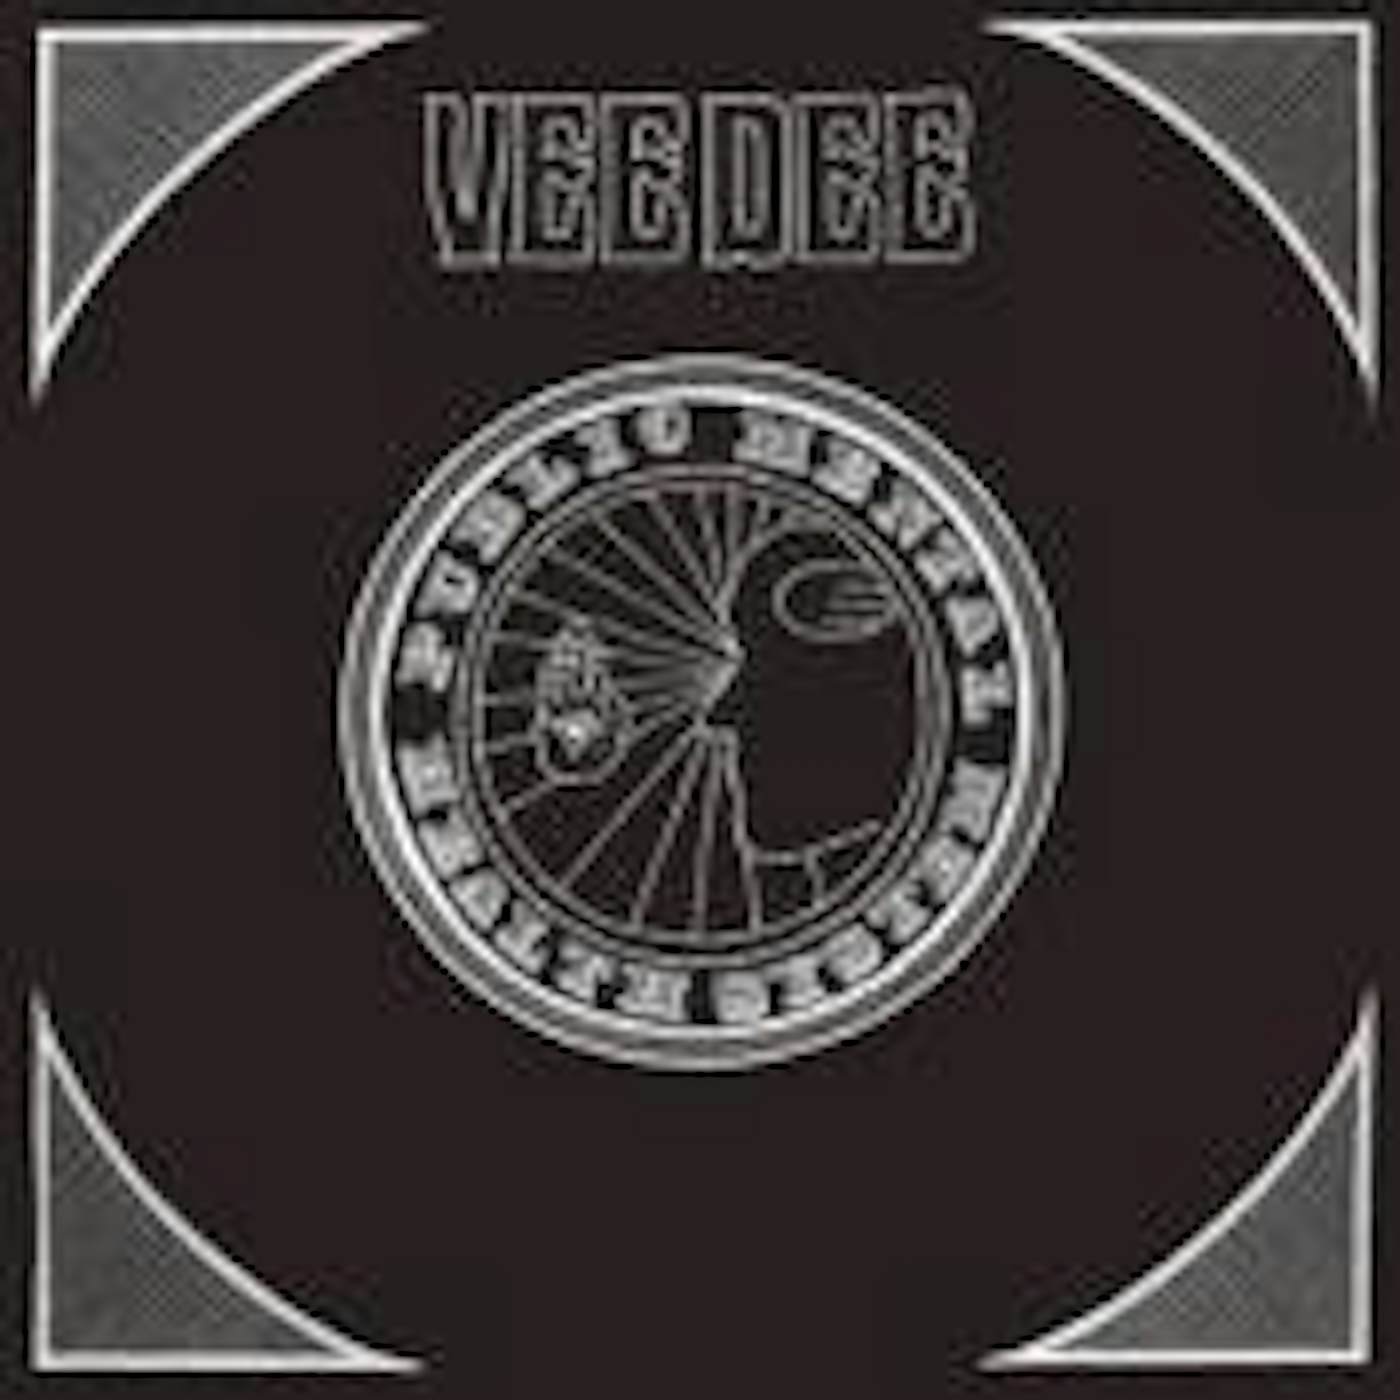 Vee Dee Public Mental Health System Vinyl Record